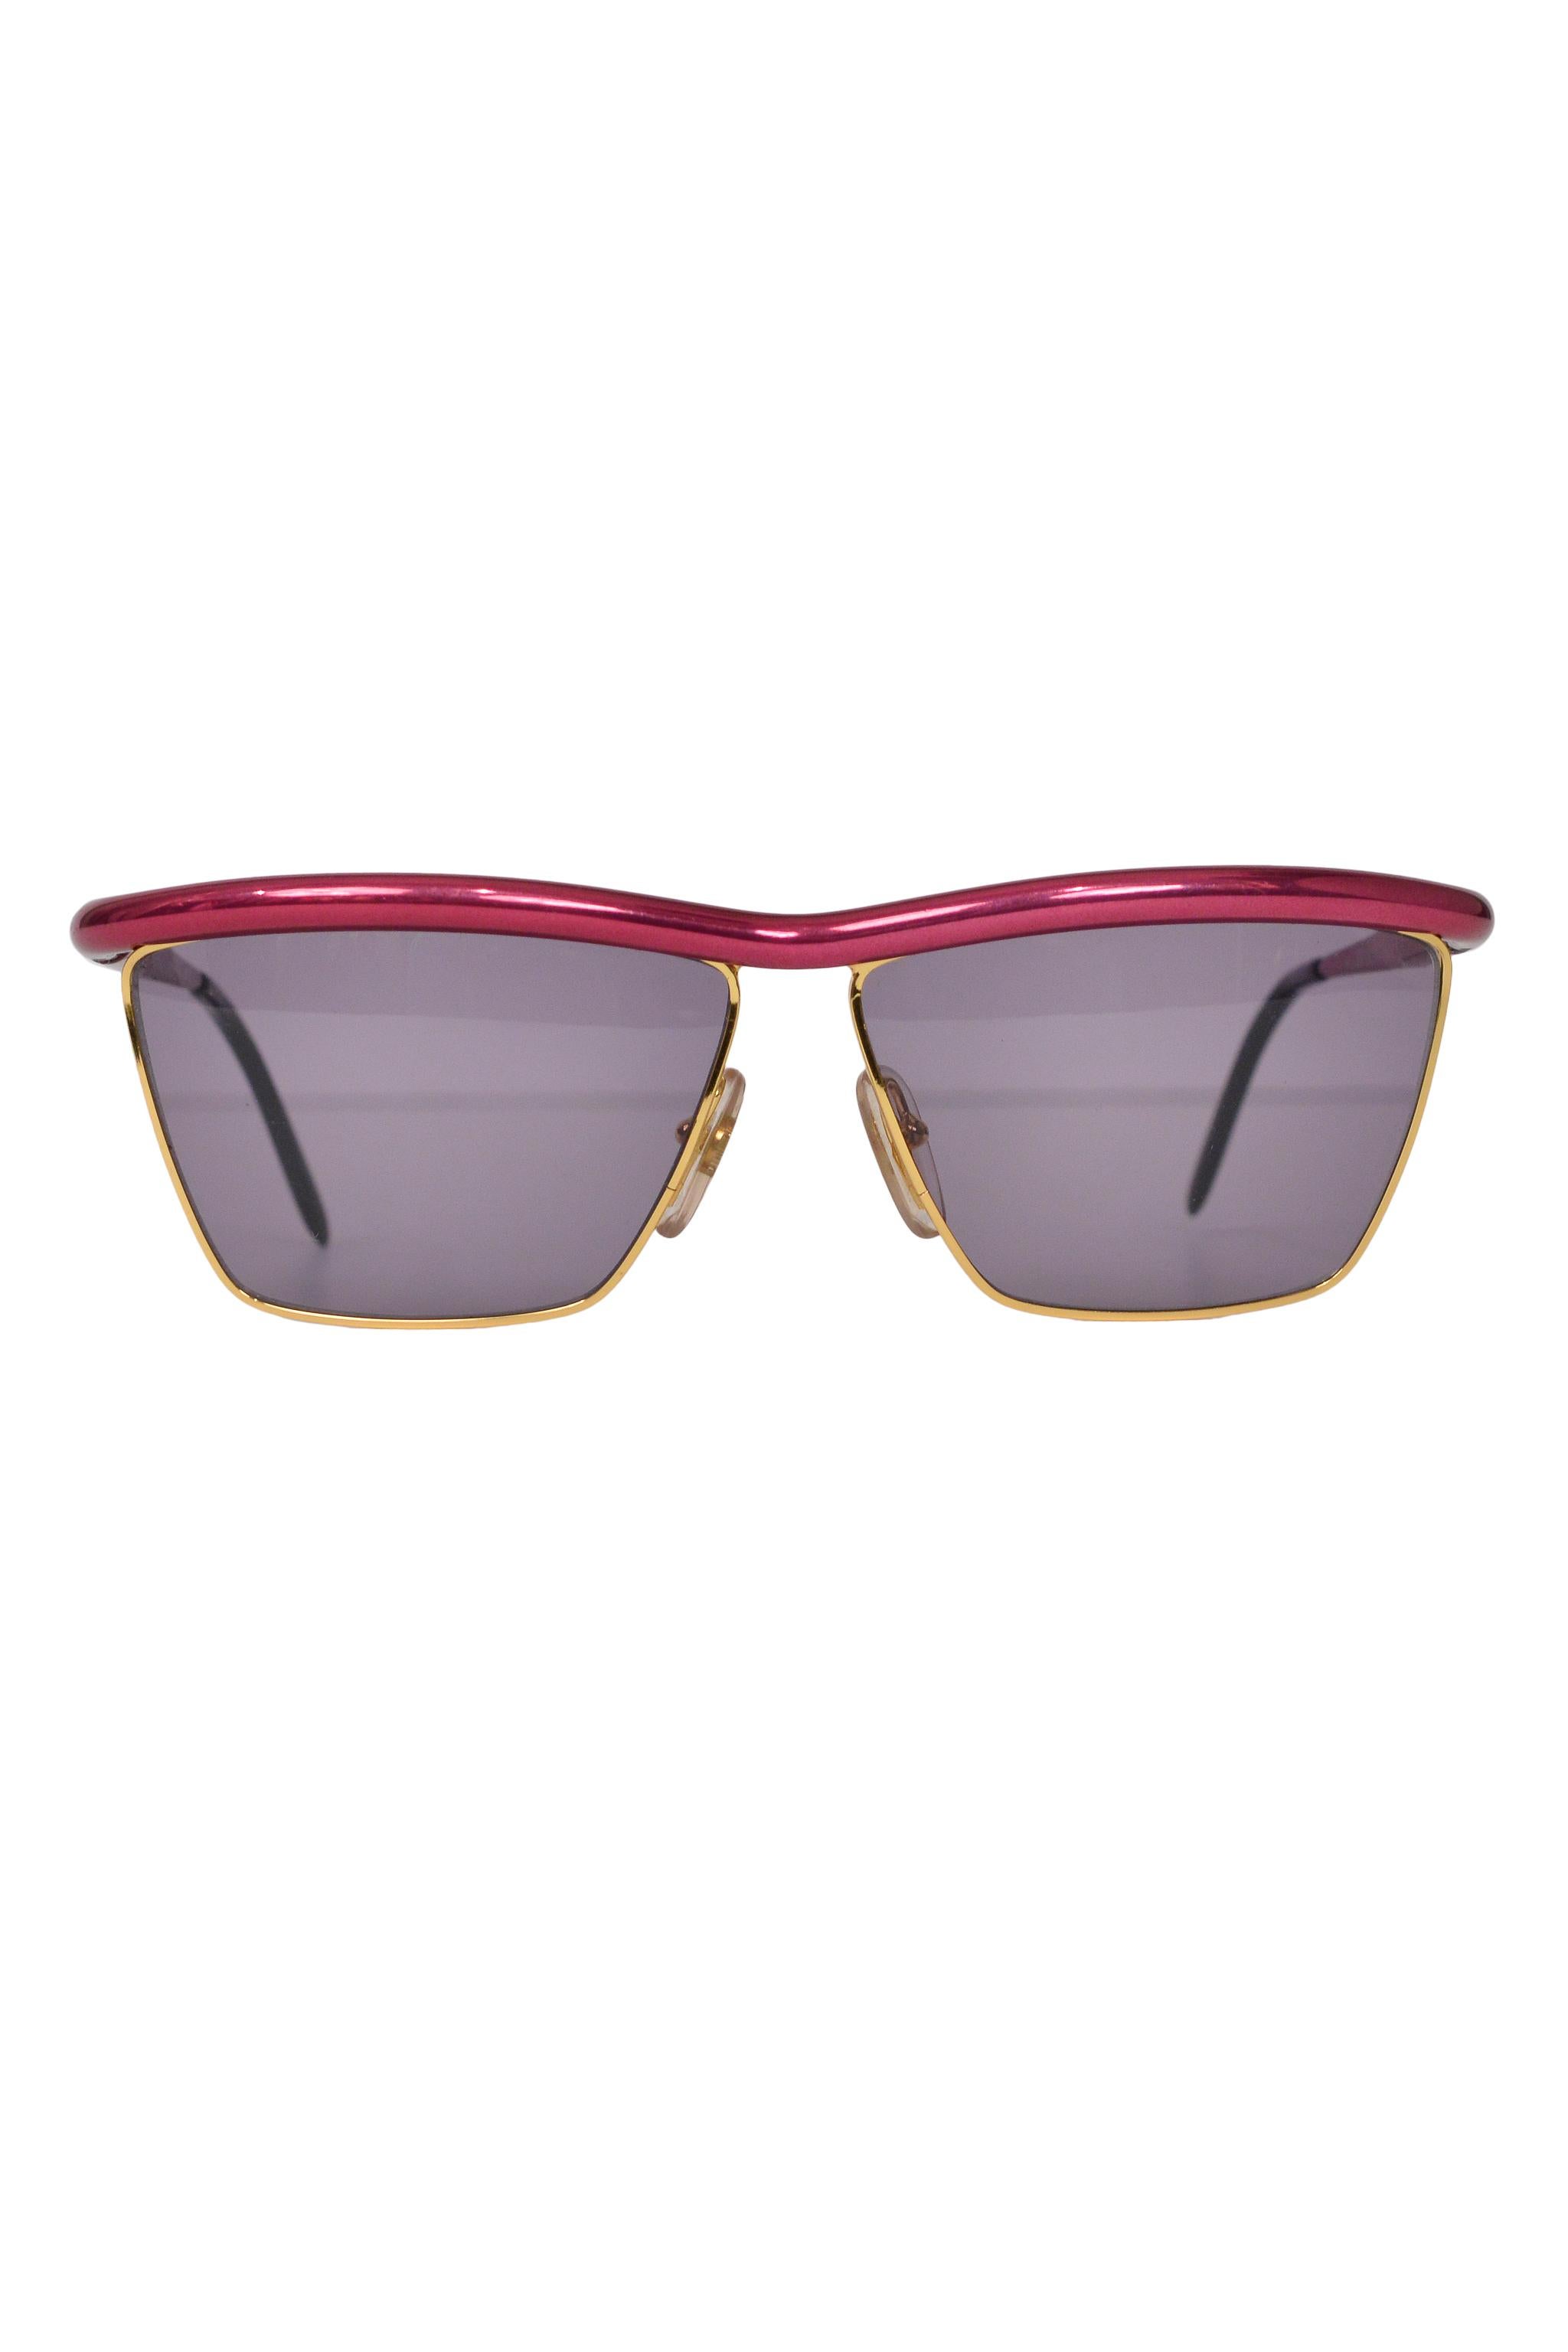 Gray Vintage Gianfranco Ferre Metallic Pink Sunglasses with Smokey Lenses  For Sale